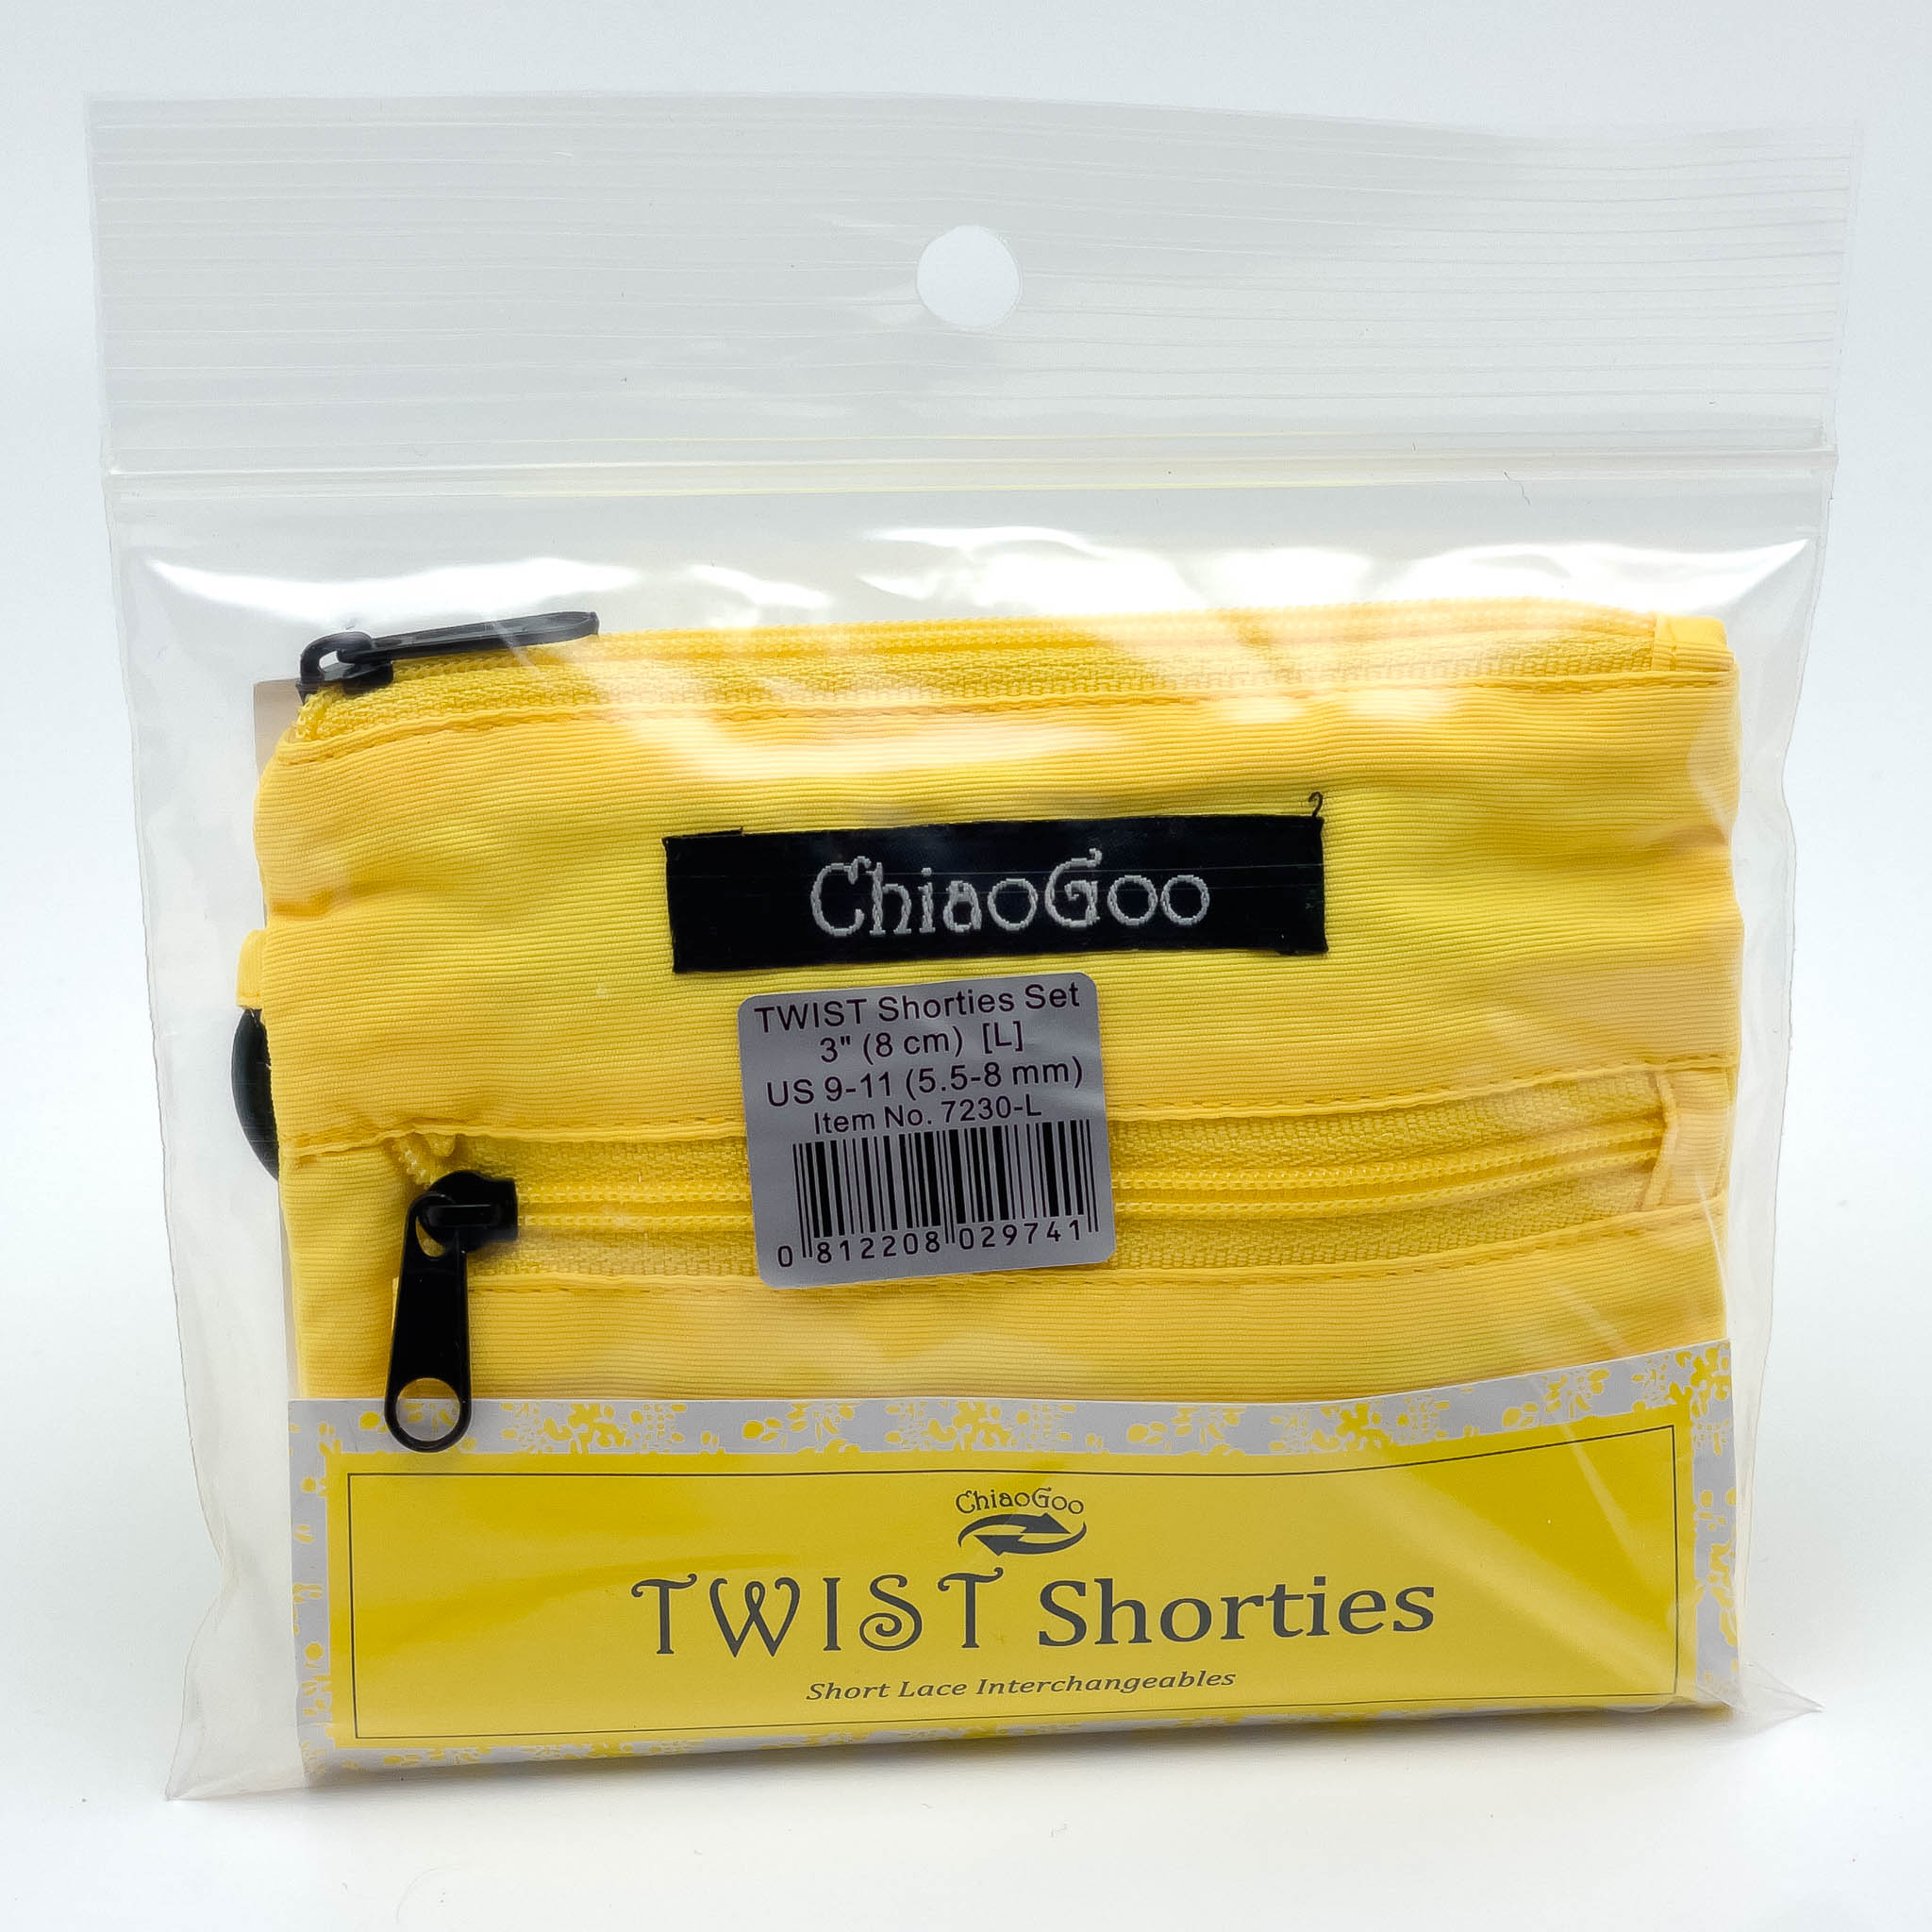 ChiaoGoo TWIST 3-Inch Shorties Yellow Set US-9 - US-11 Stainless Steel Interchangeable Knitting Needles